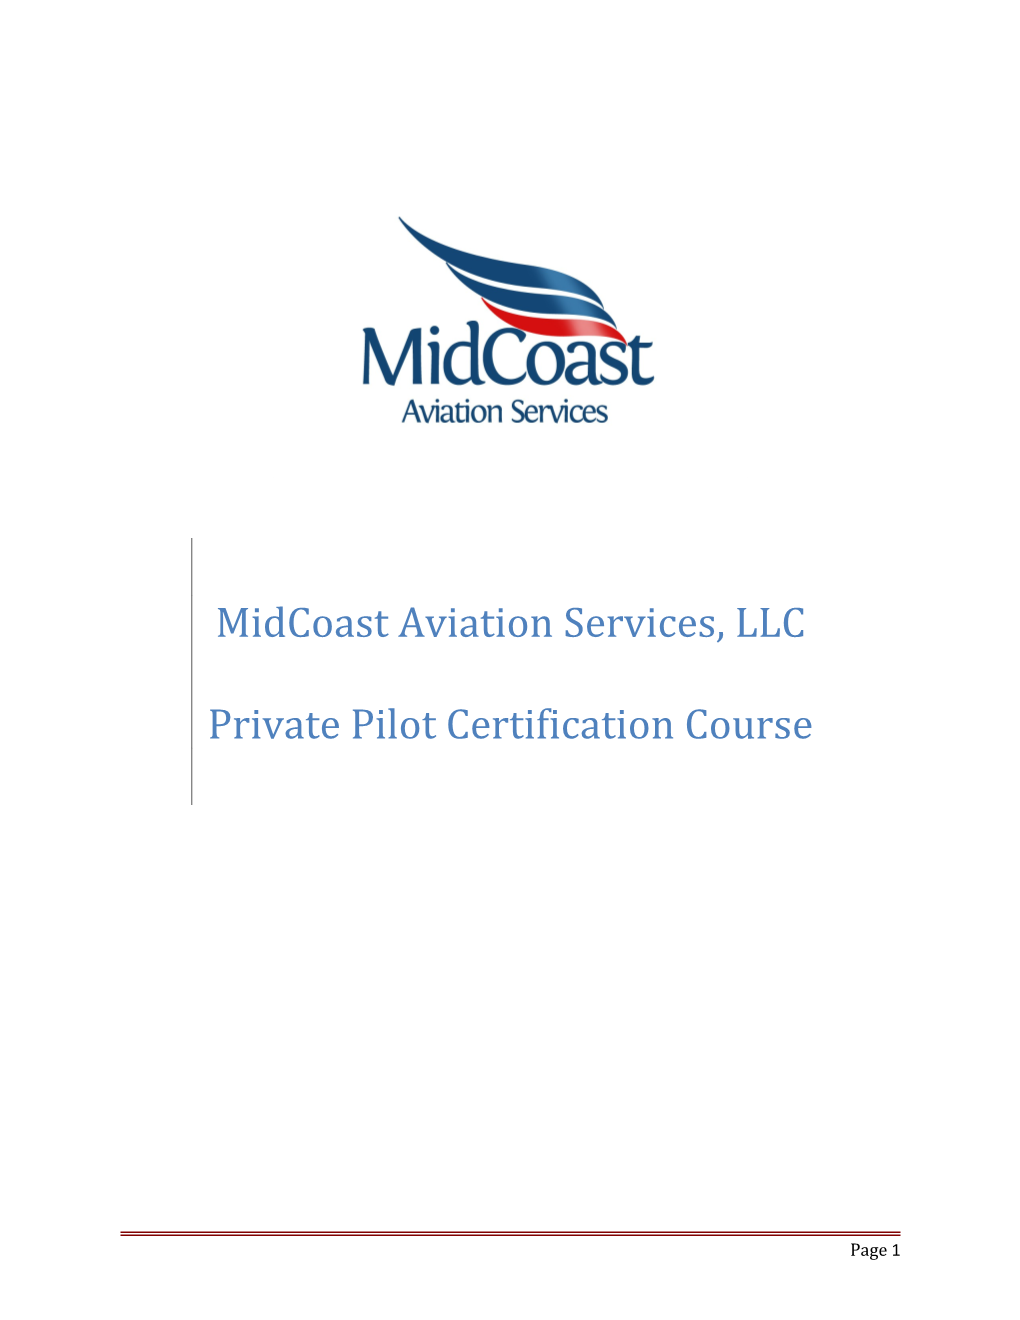 Midcoast Aviation Services, LLC Private Pilot Certification Course